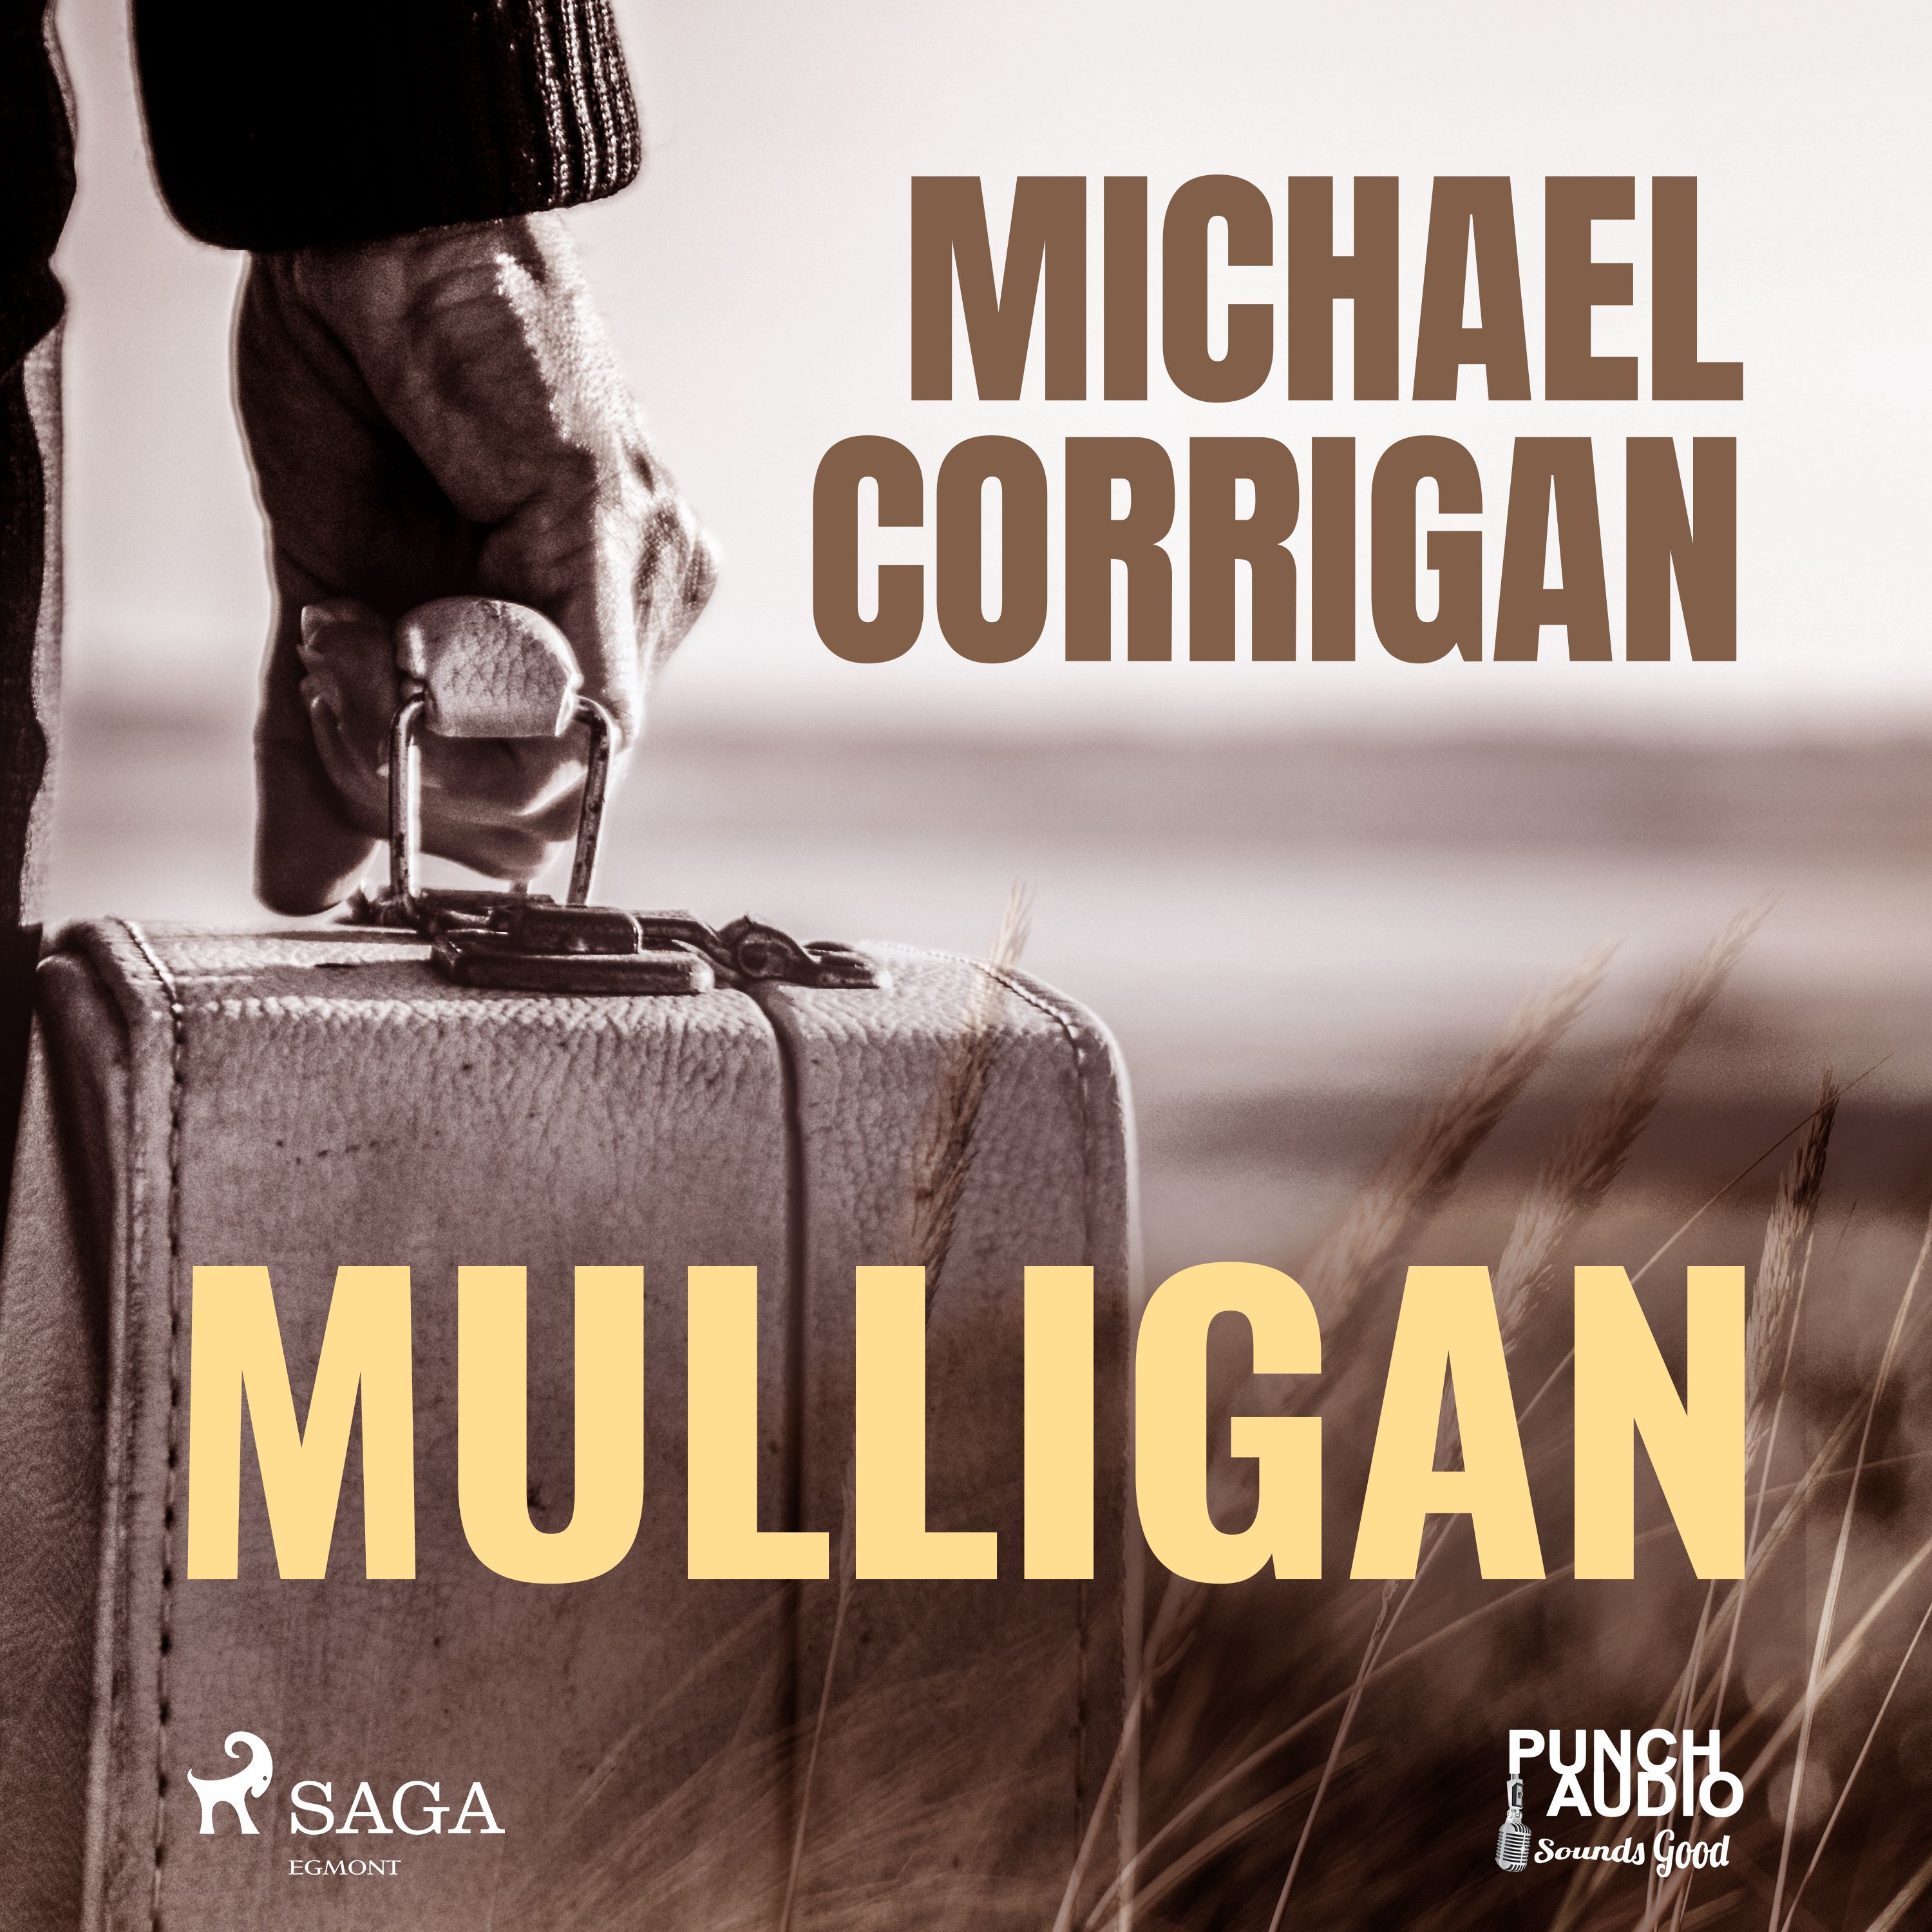 Mulligan, lydbog af Michael Corrigan